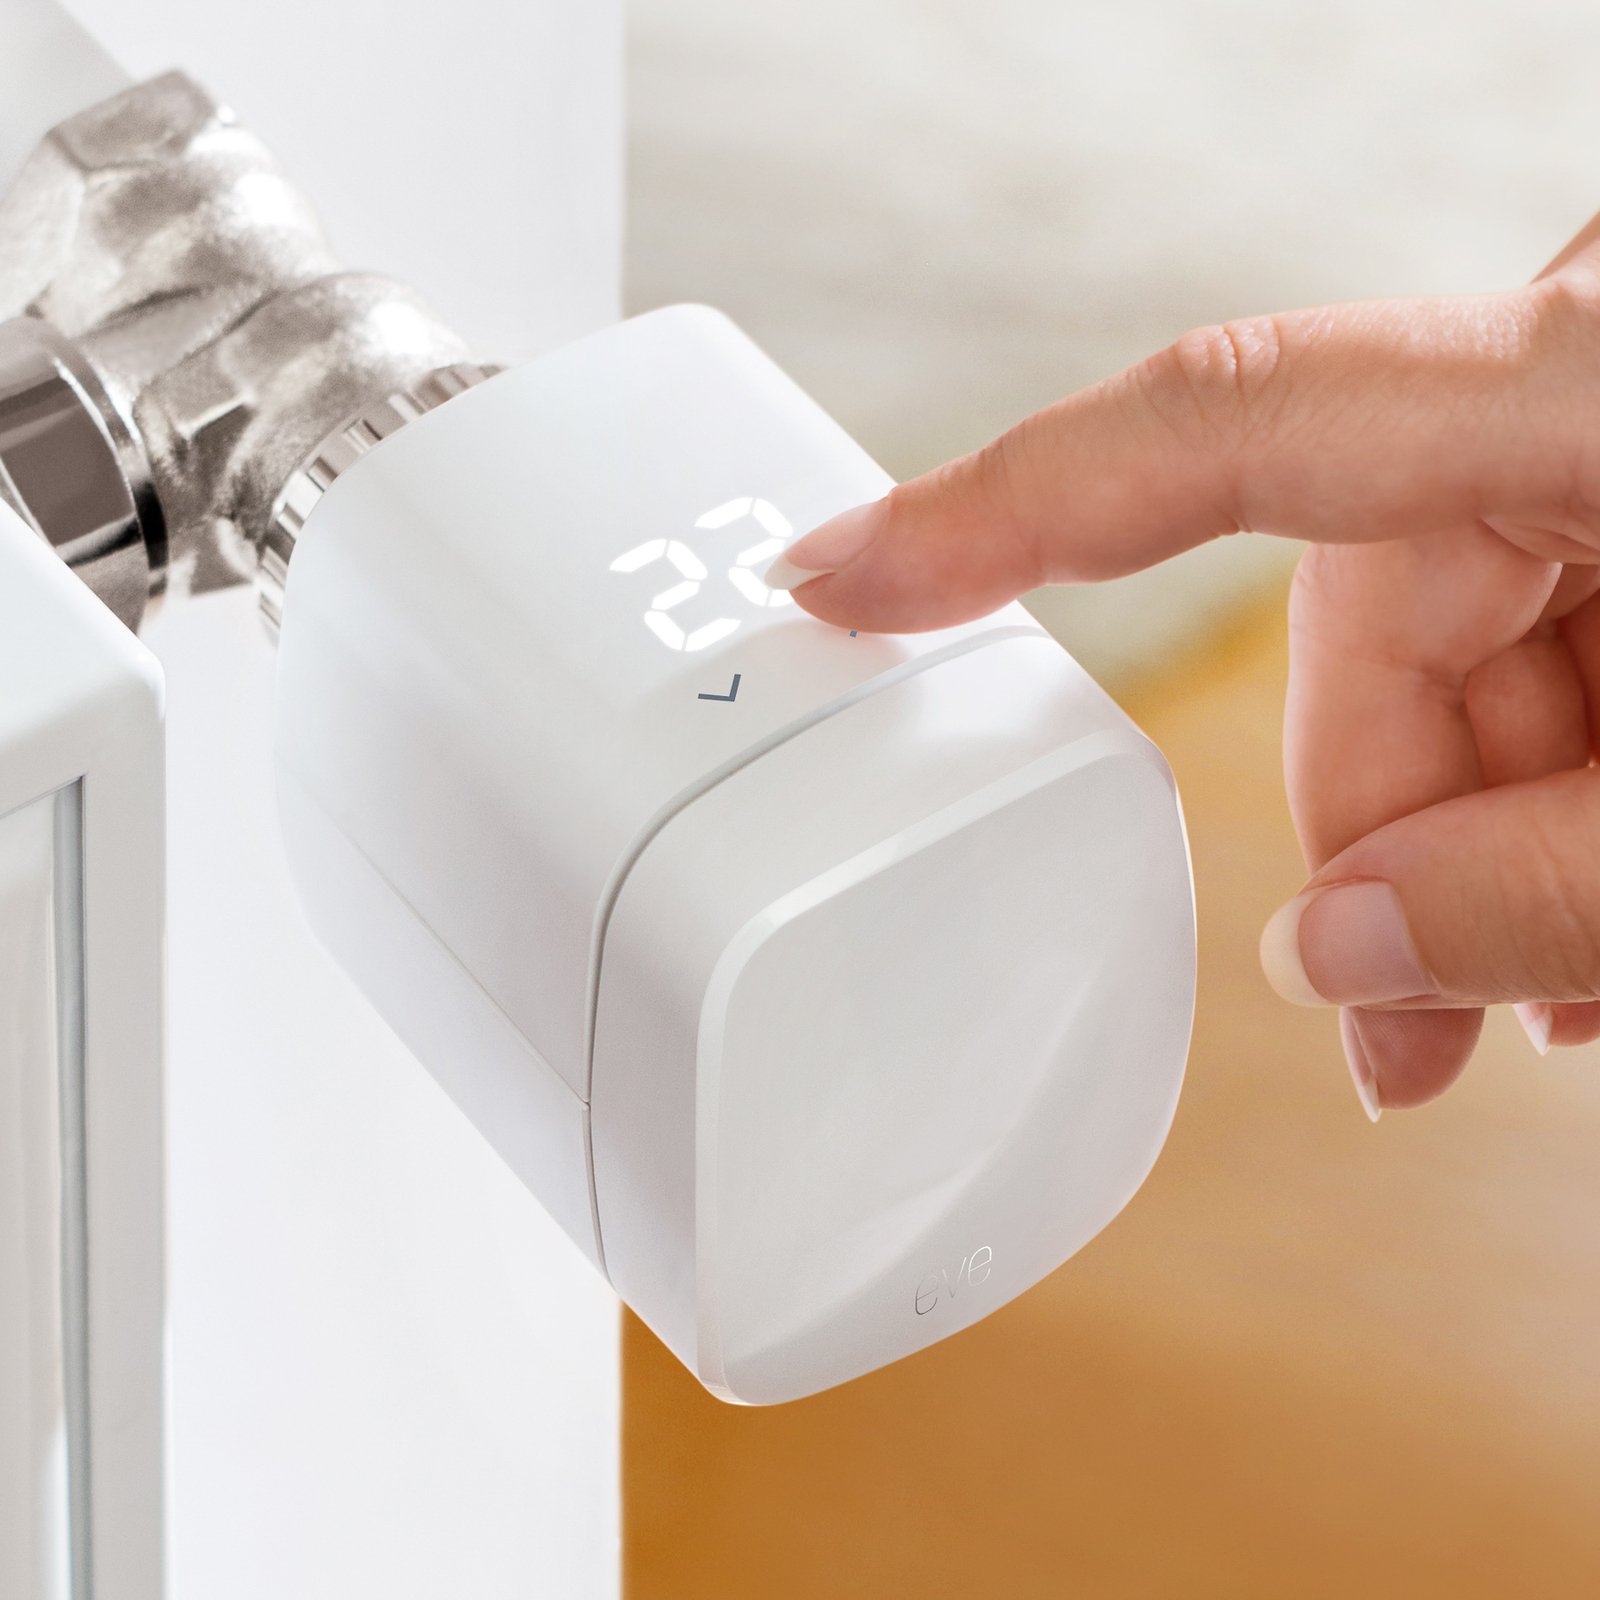 Eve Thermo Smart Home termostato para radiador